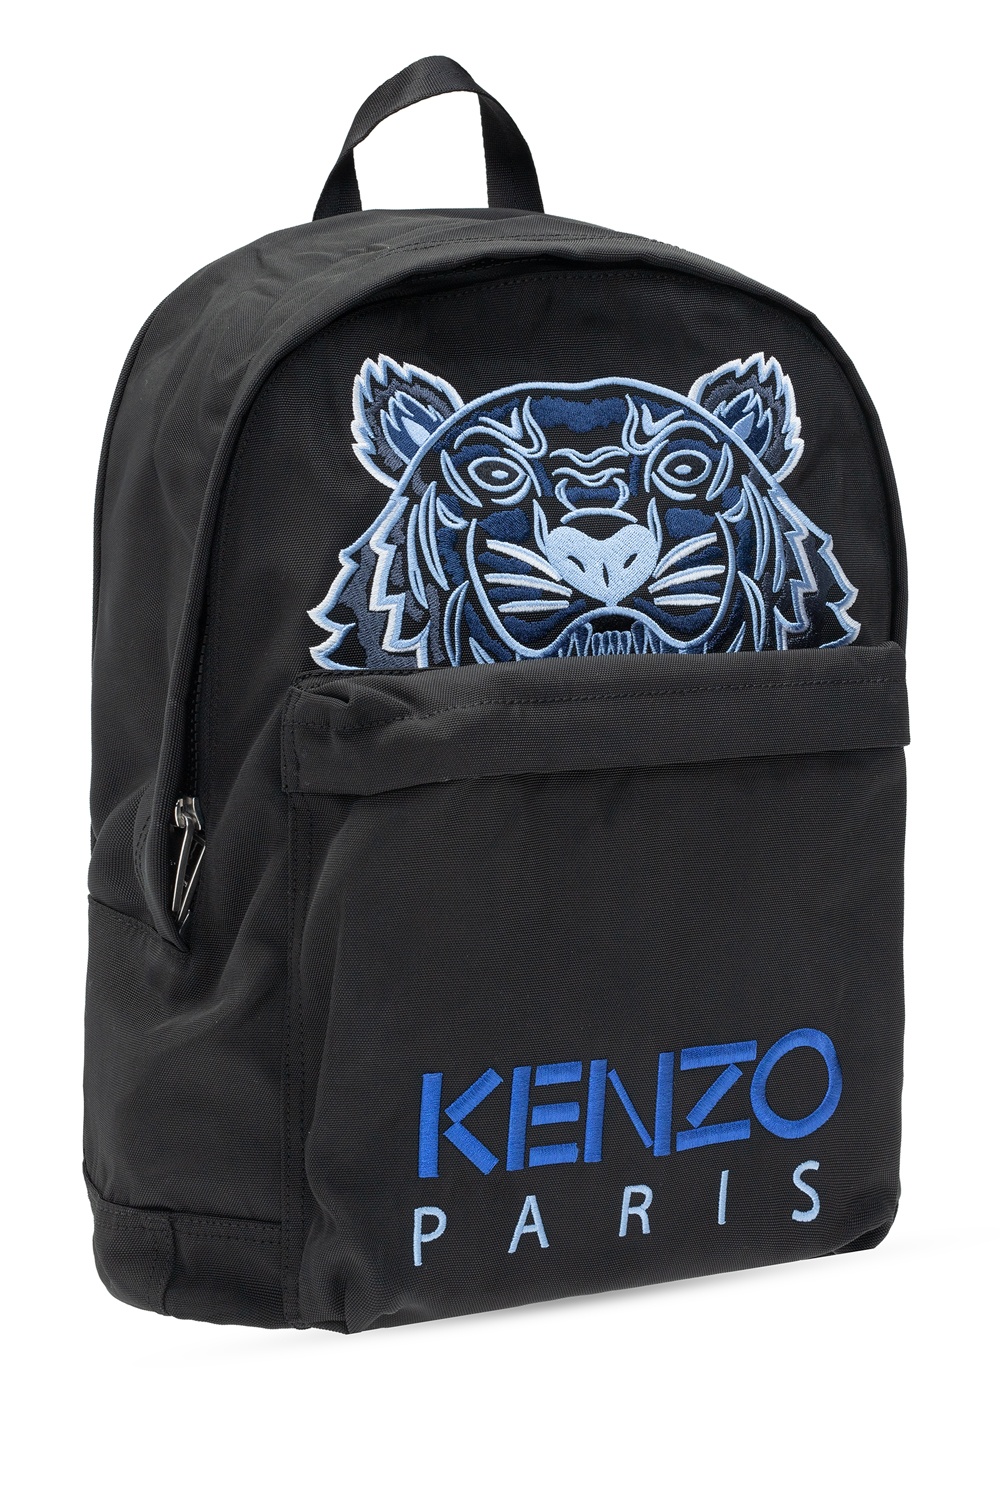 Kenzo Tiger head backpack